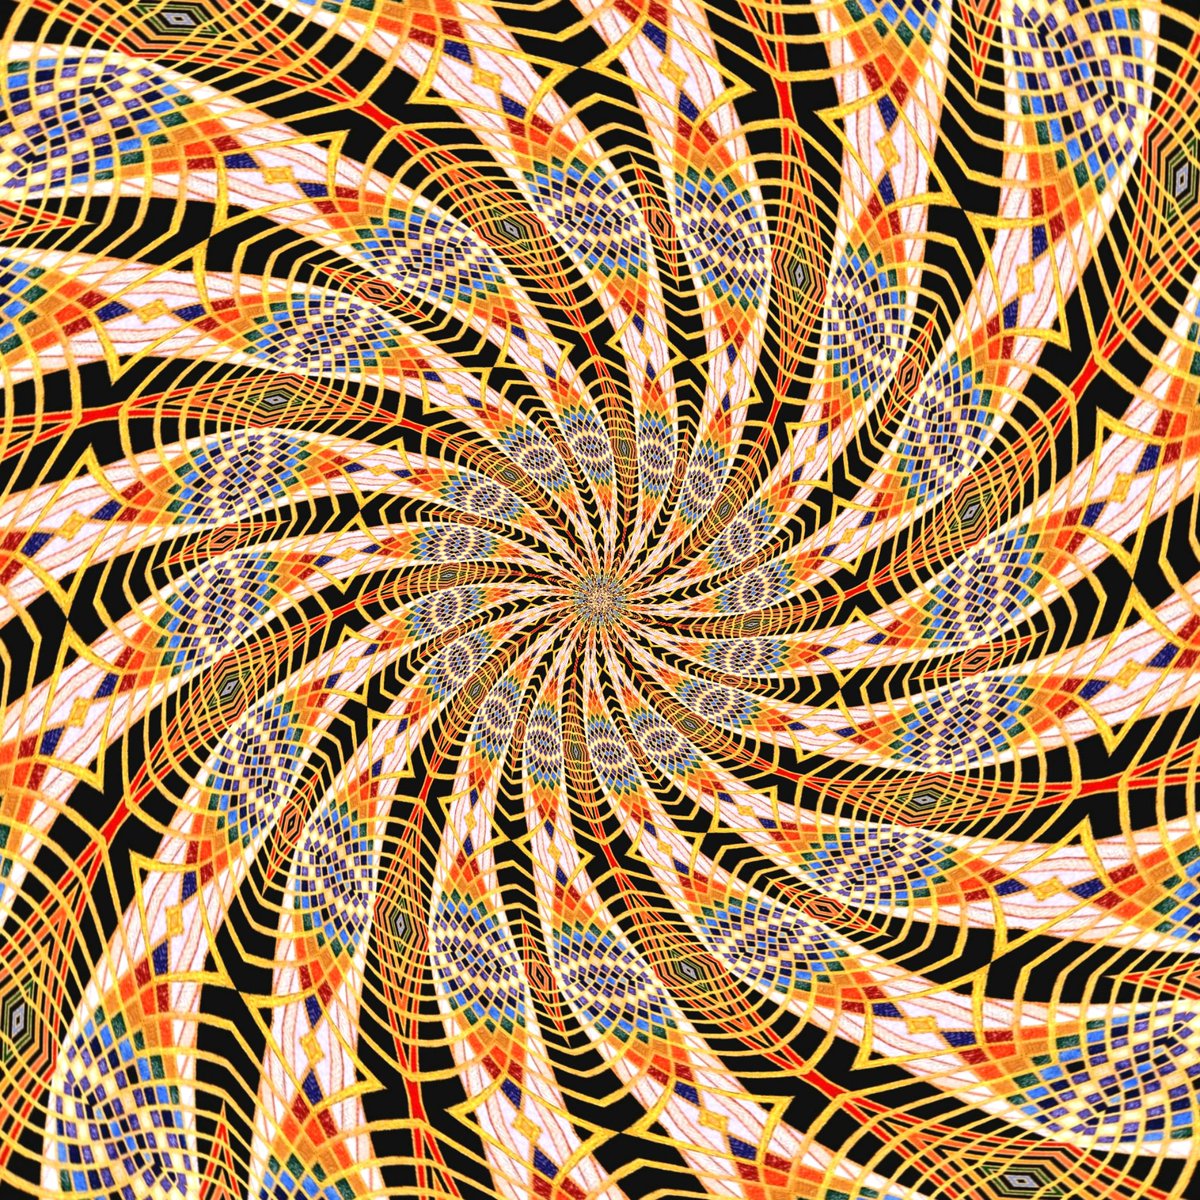 'Rising Swirl' #art #Geometry #geometricart #mathart #spiral #circle #symbolism #contemporaryart #modernart #mixedmedia #sacredgeometry